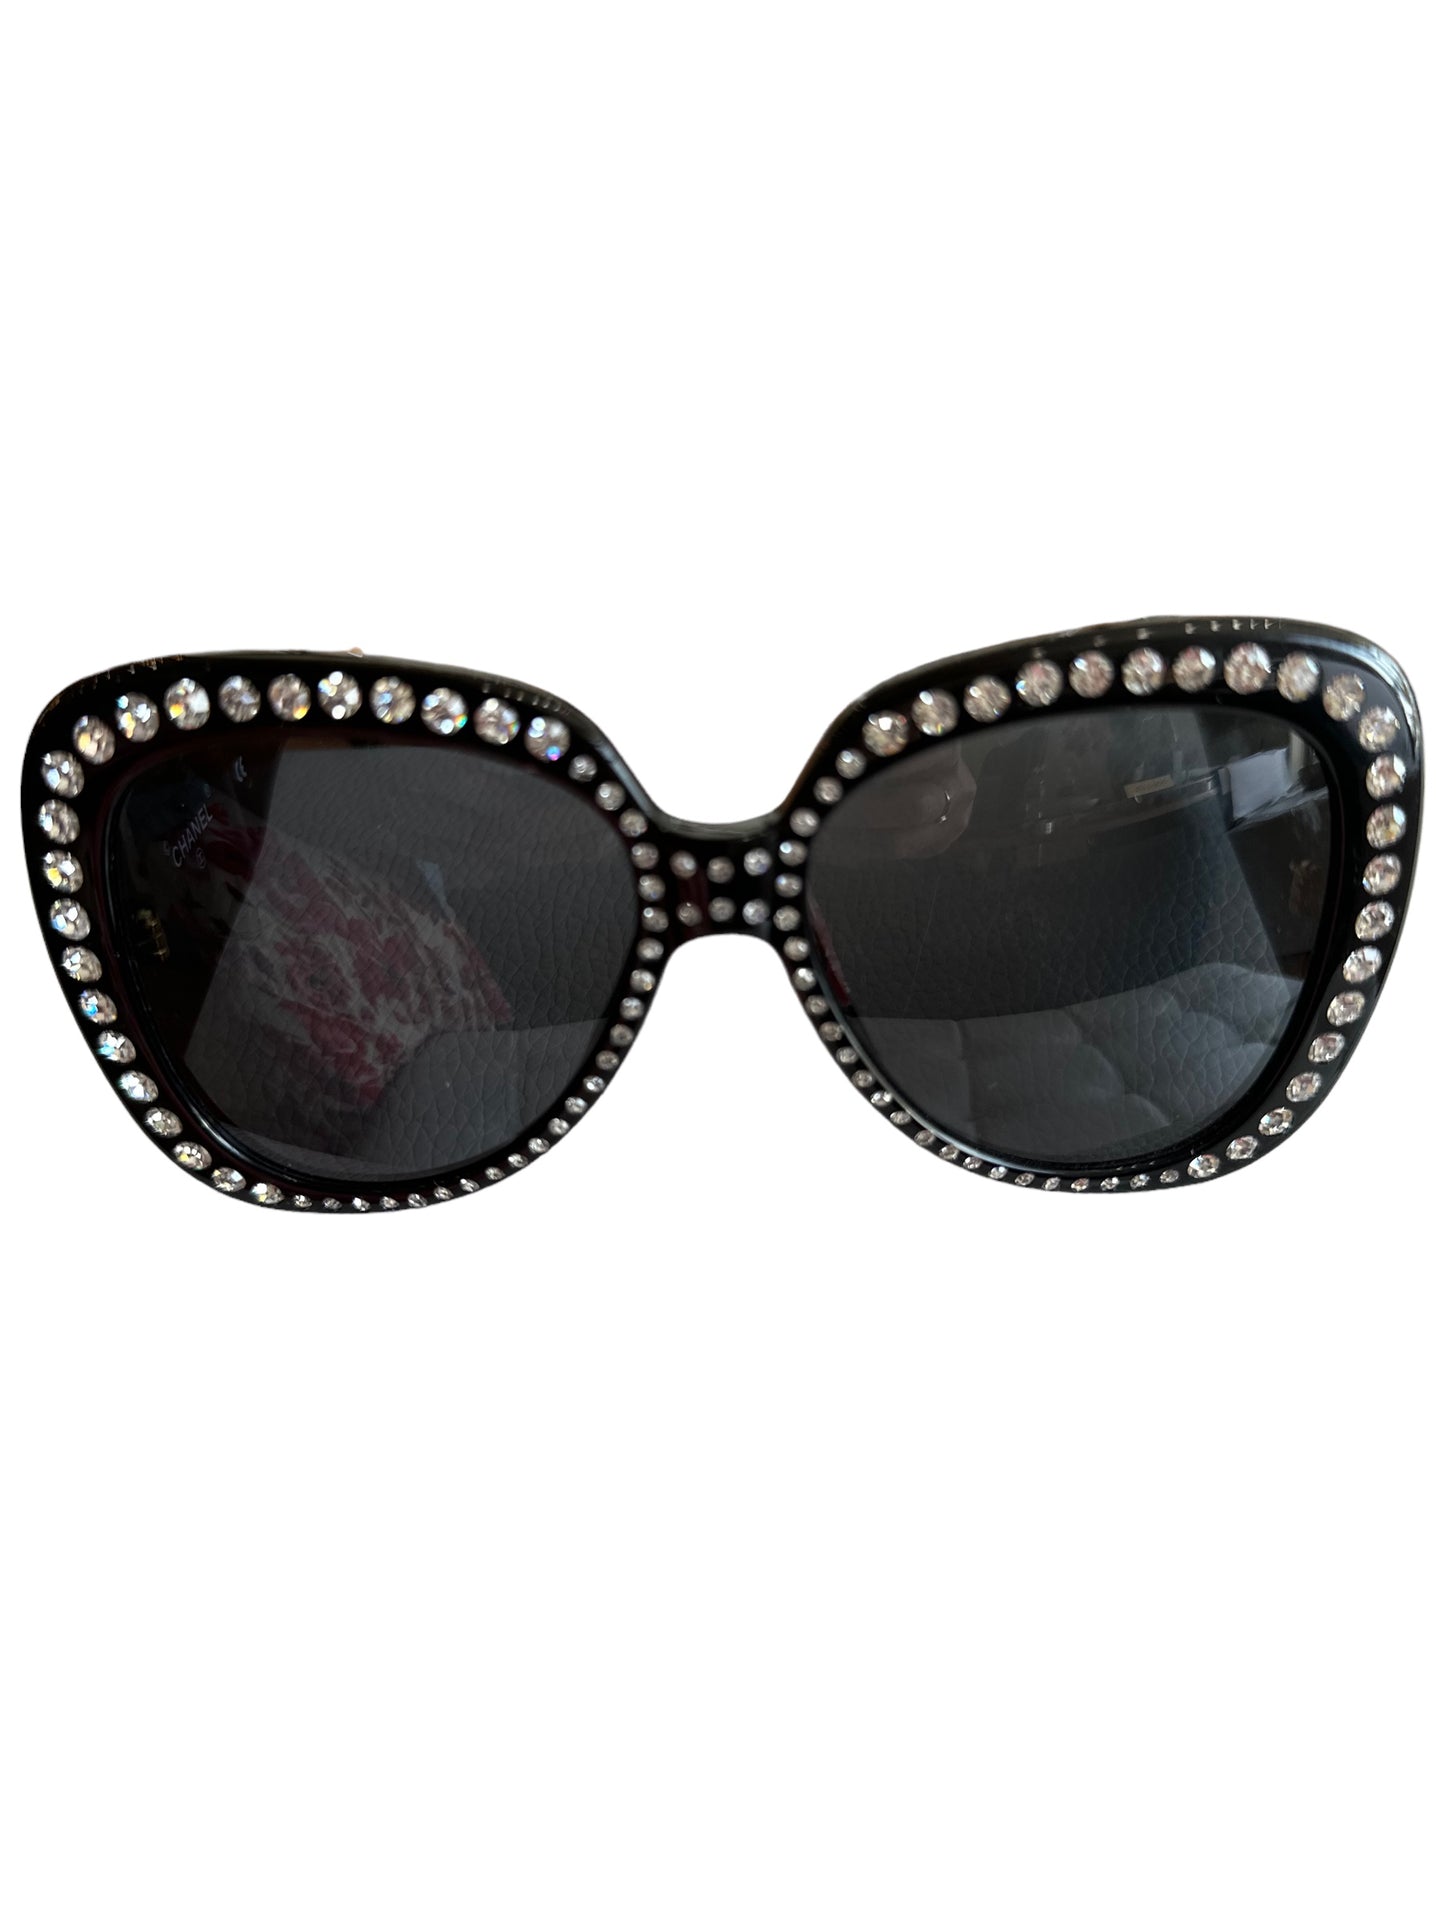 Vintage Chanel 1994 rhinestone sunglasses 05257 94305